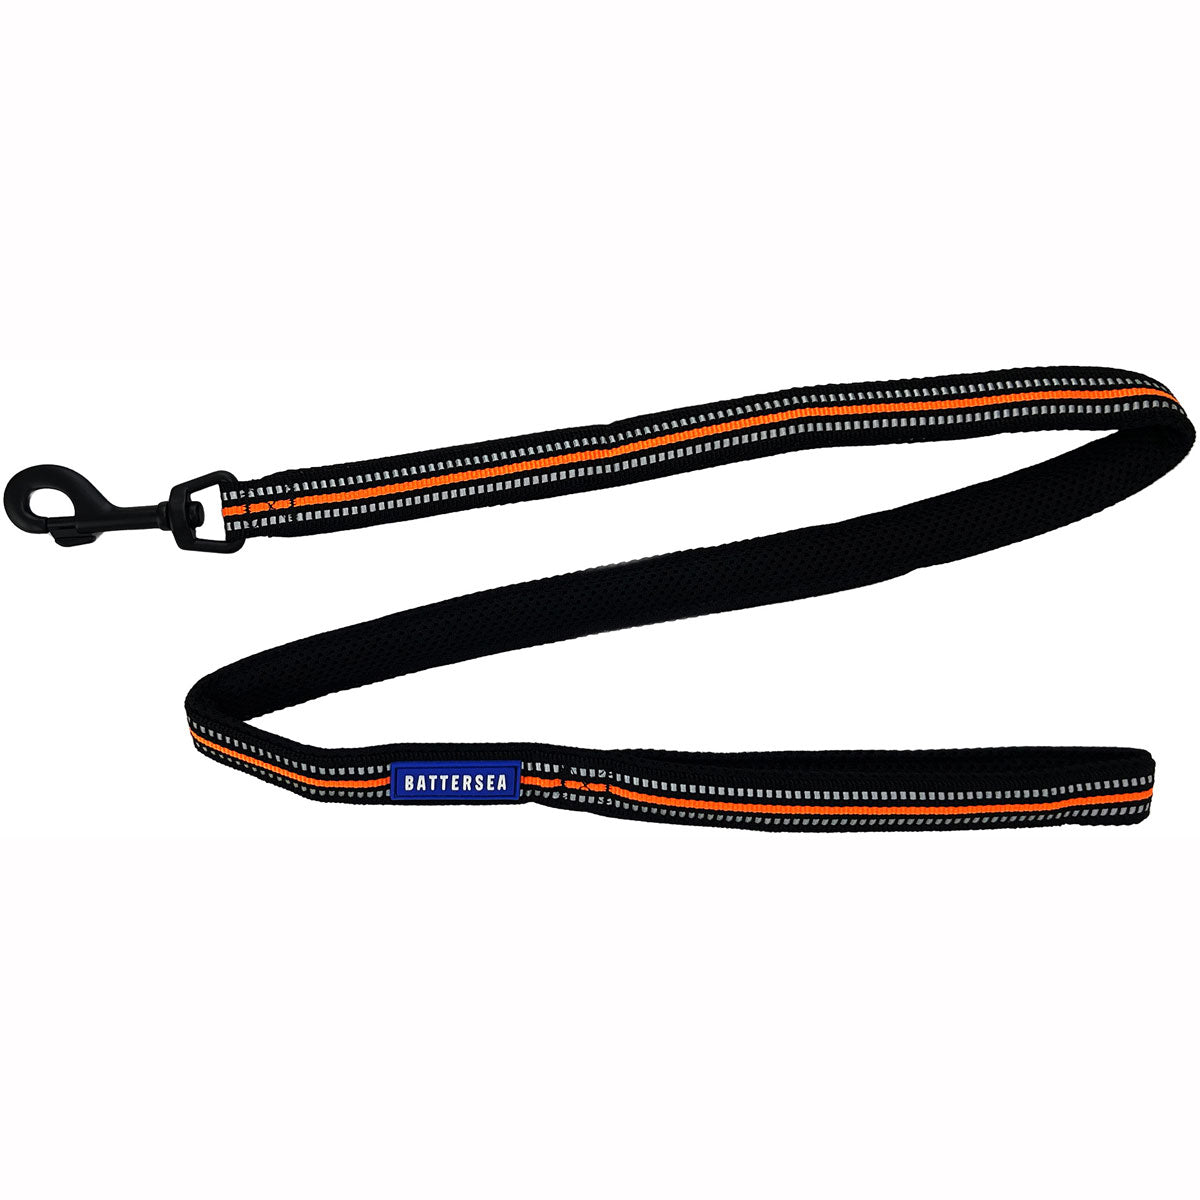 The 110cms Battersea Reflective Dog Lead: Treat your four-legged friend to the Battersea Reflective Lead 110cms Orange